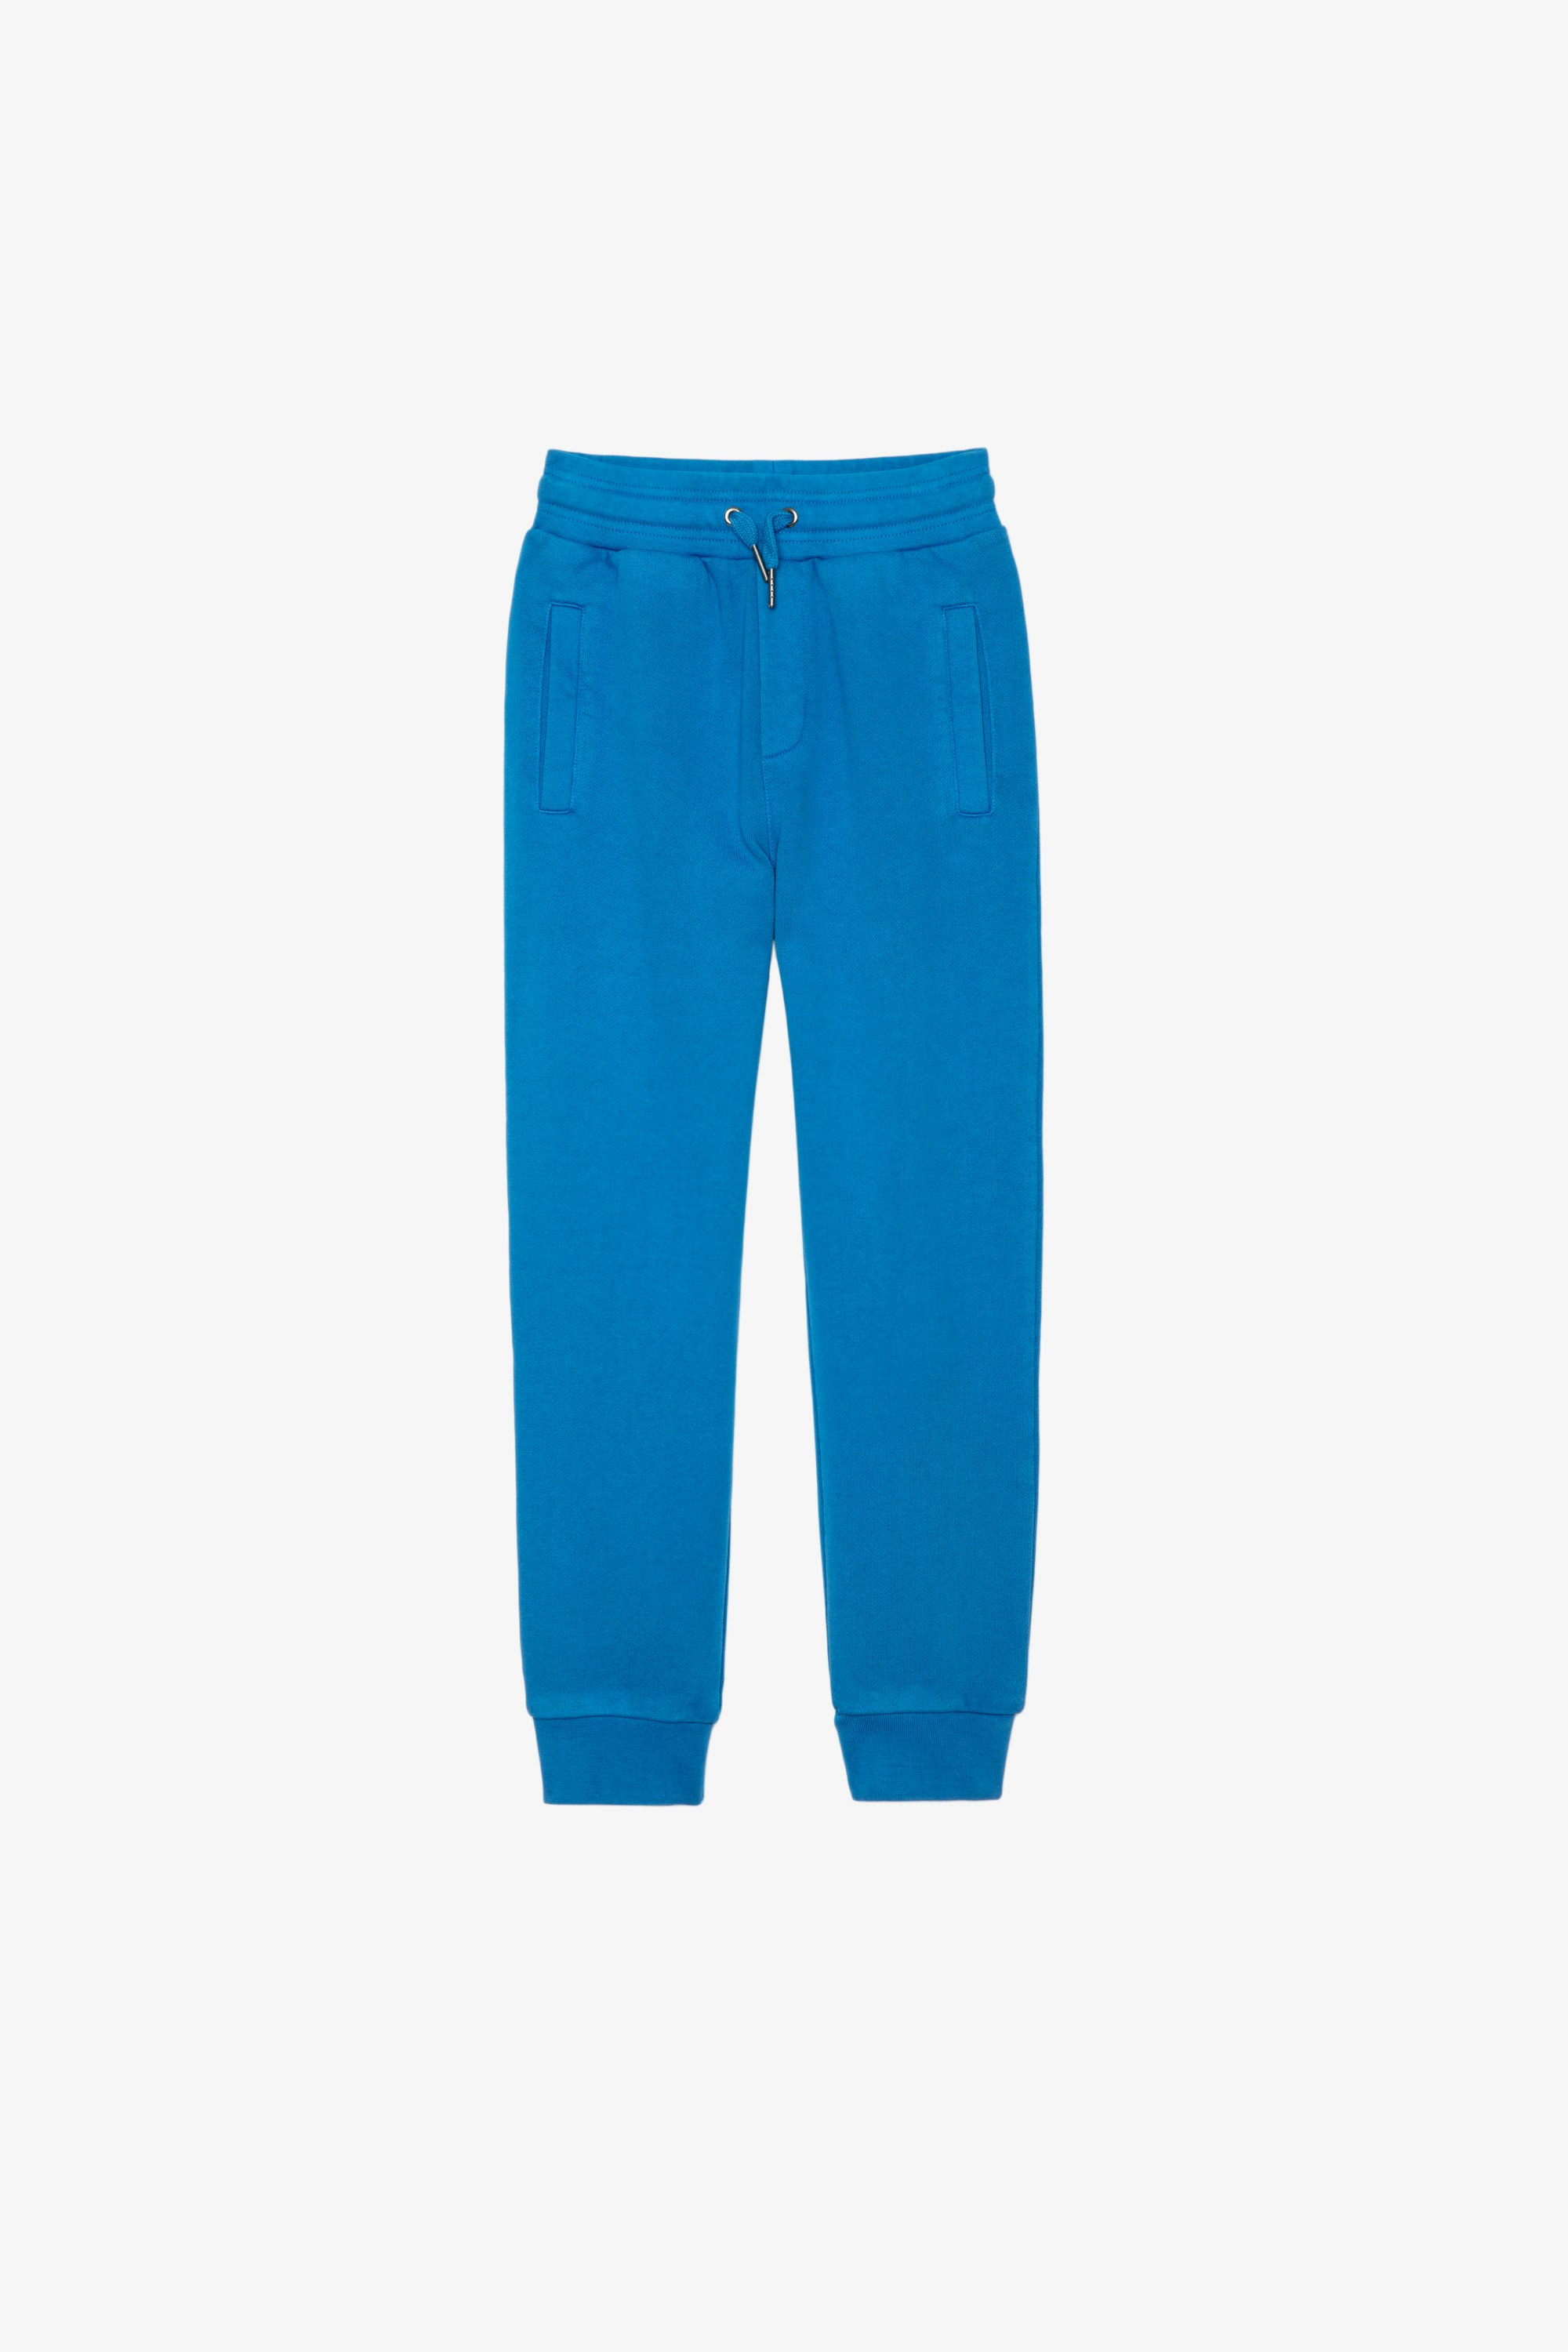 Kinderhose Lemmy Kinder-Jogginghose aus blauer Baumwolle